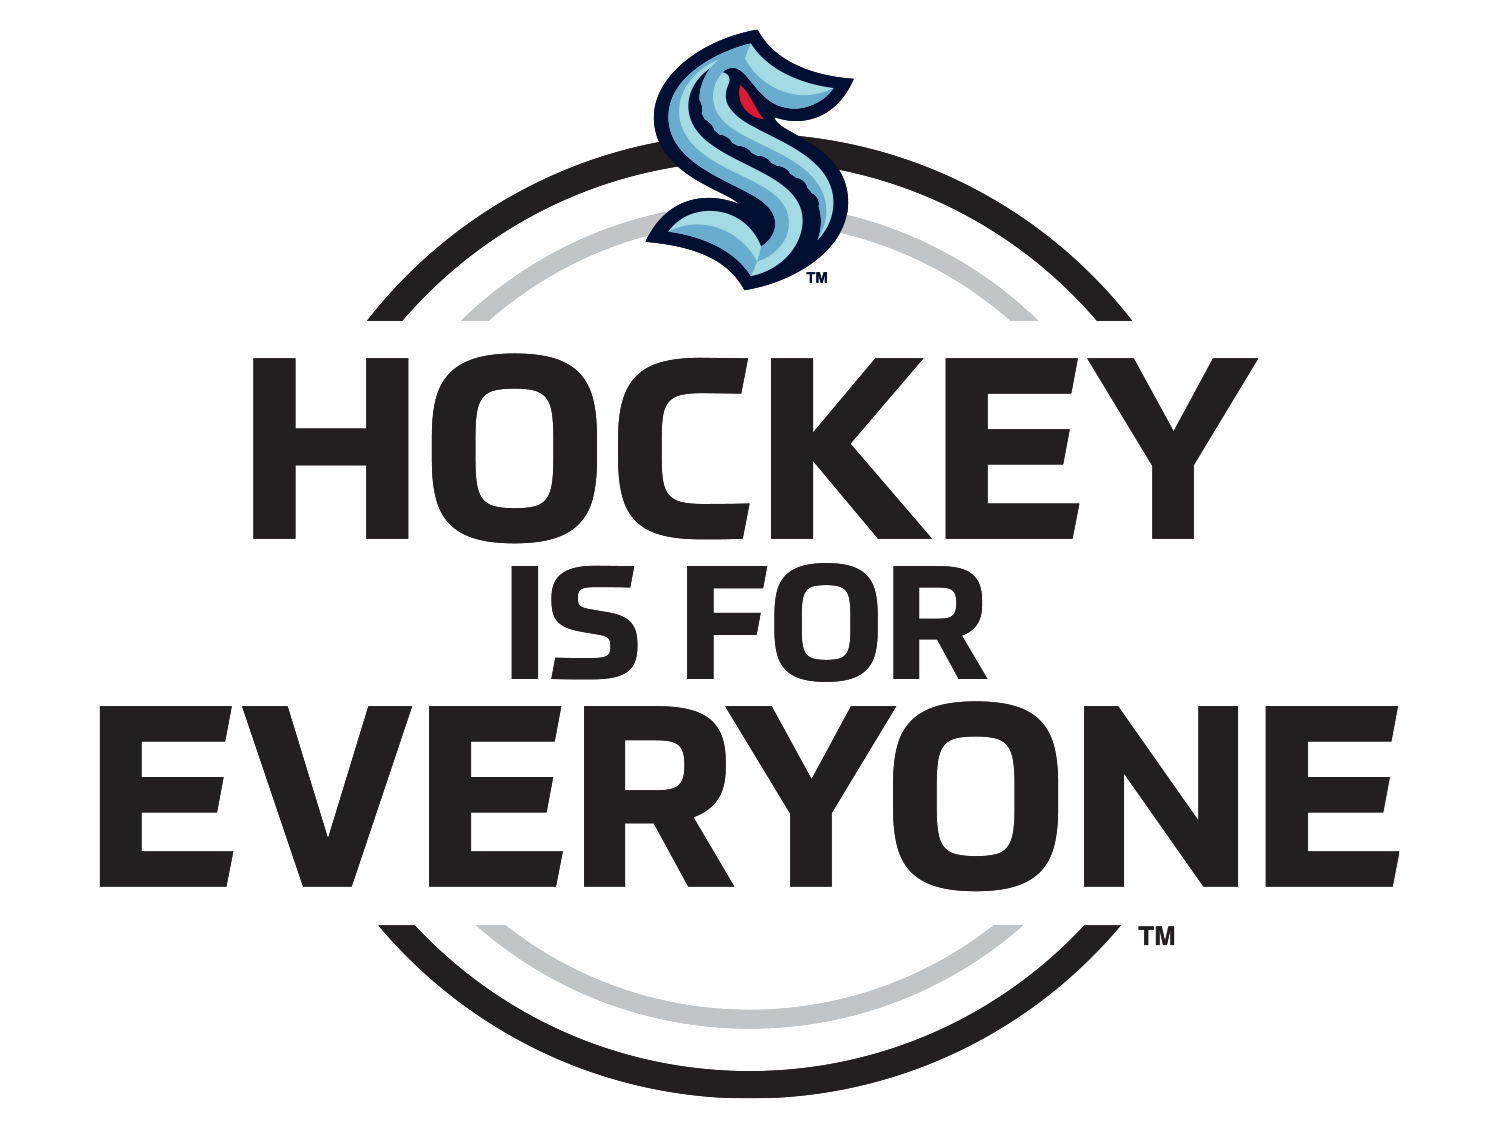 Hockey is for Everyone logo